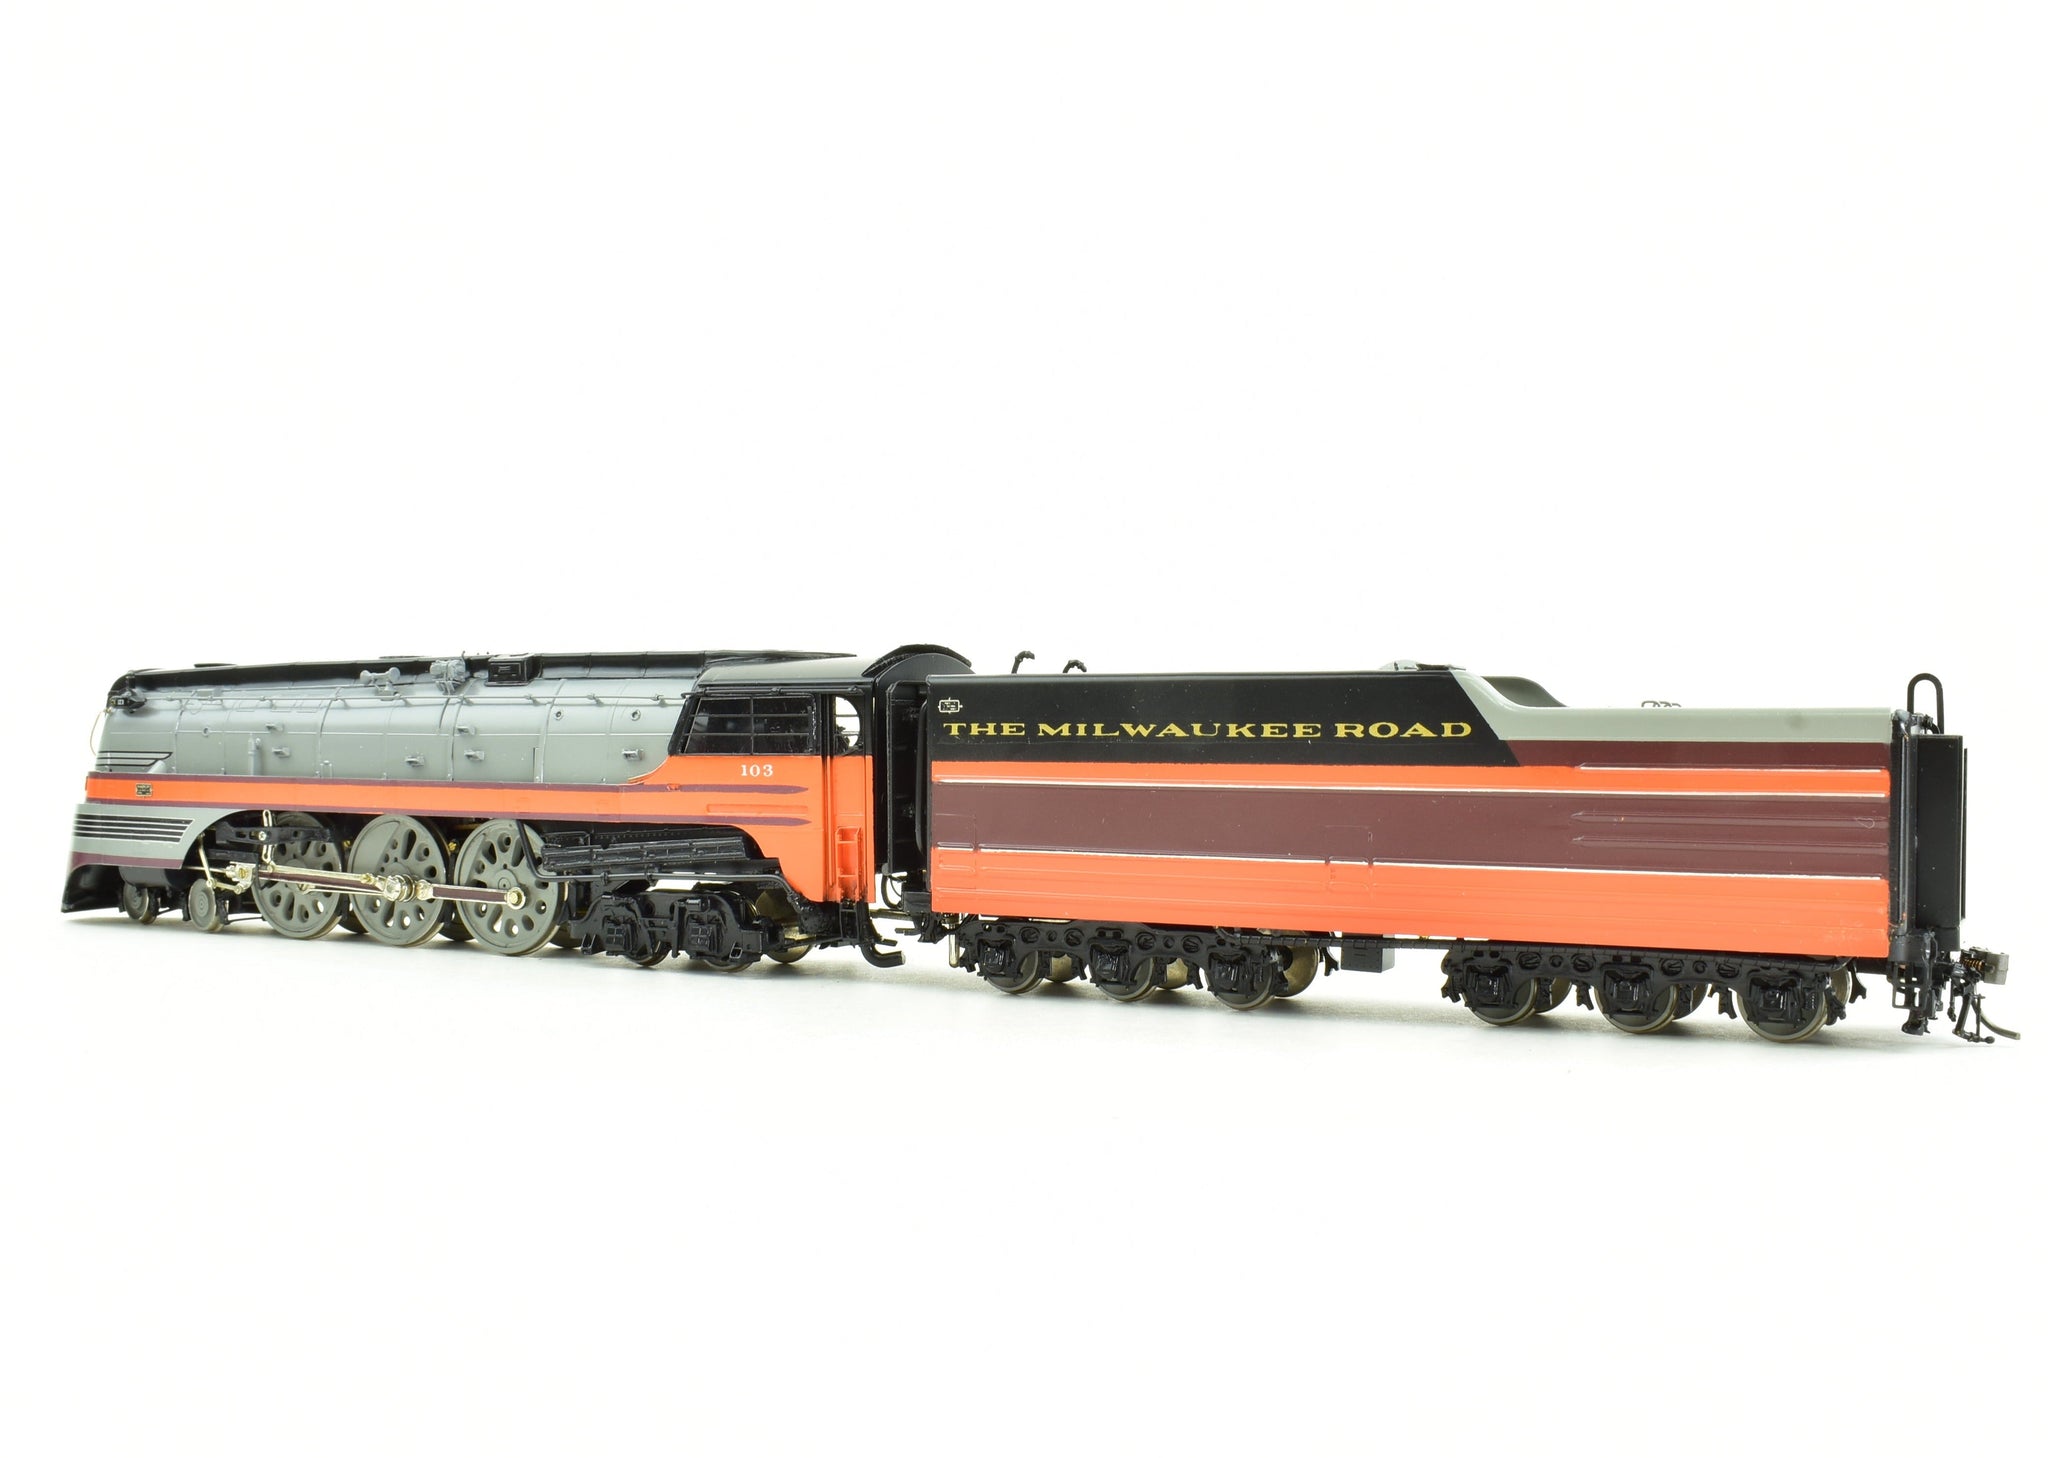 061558-HO Brass Model Train - OMI 5697.1 Overland Milwaukee Hiawatha Erie- Built A-B-A Diesel Set #5 